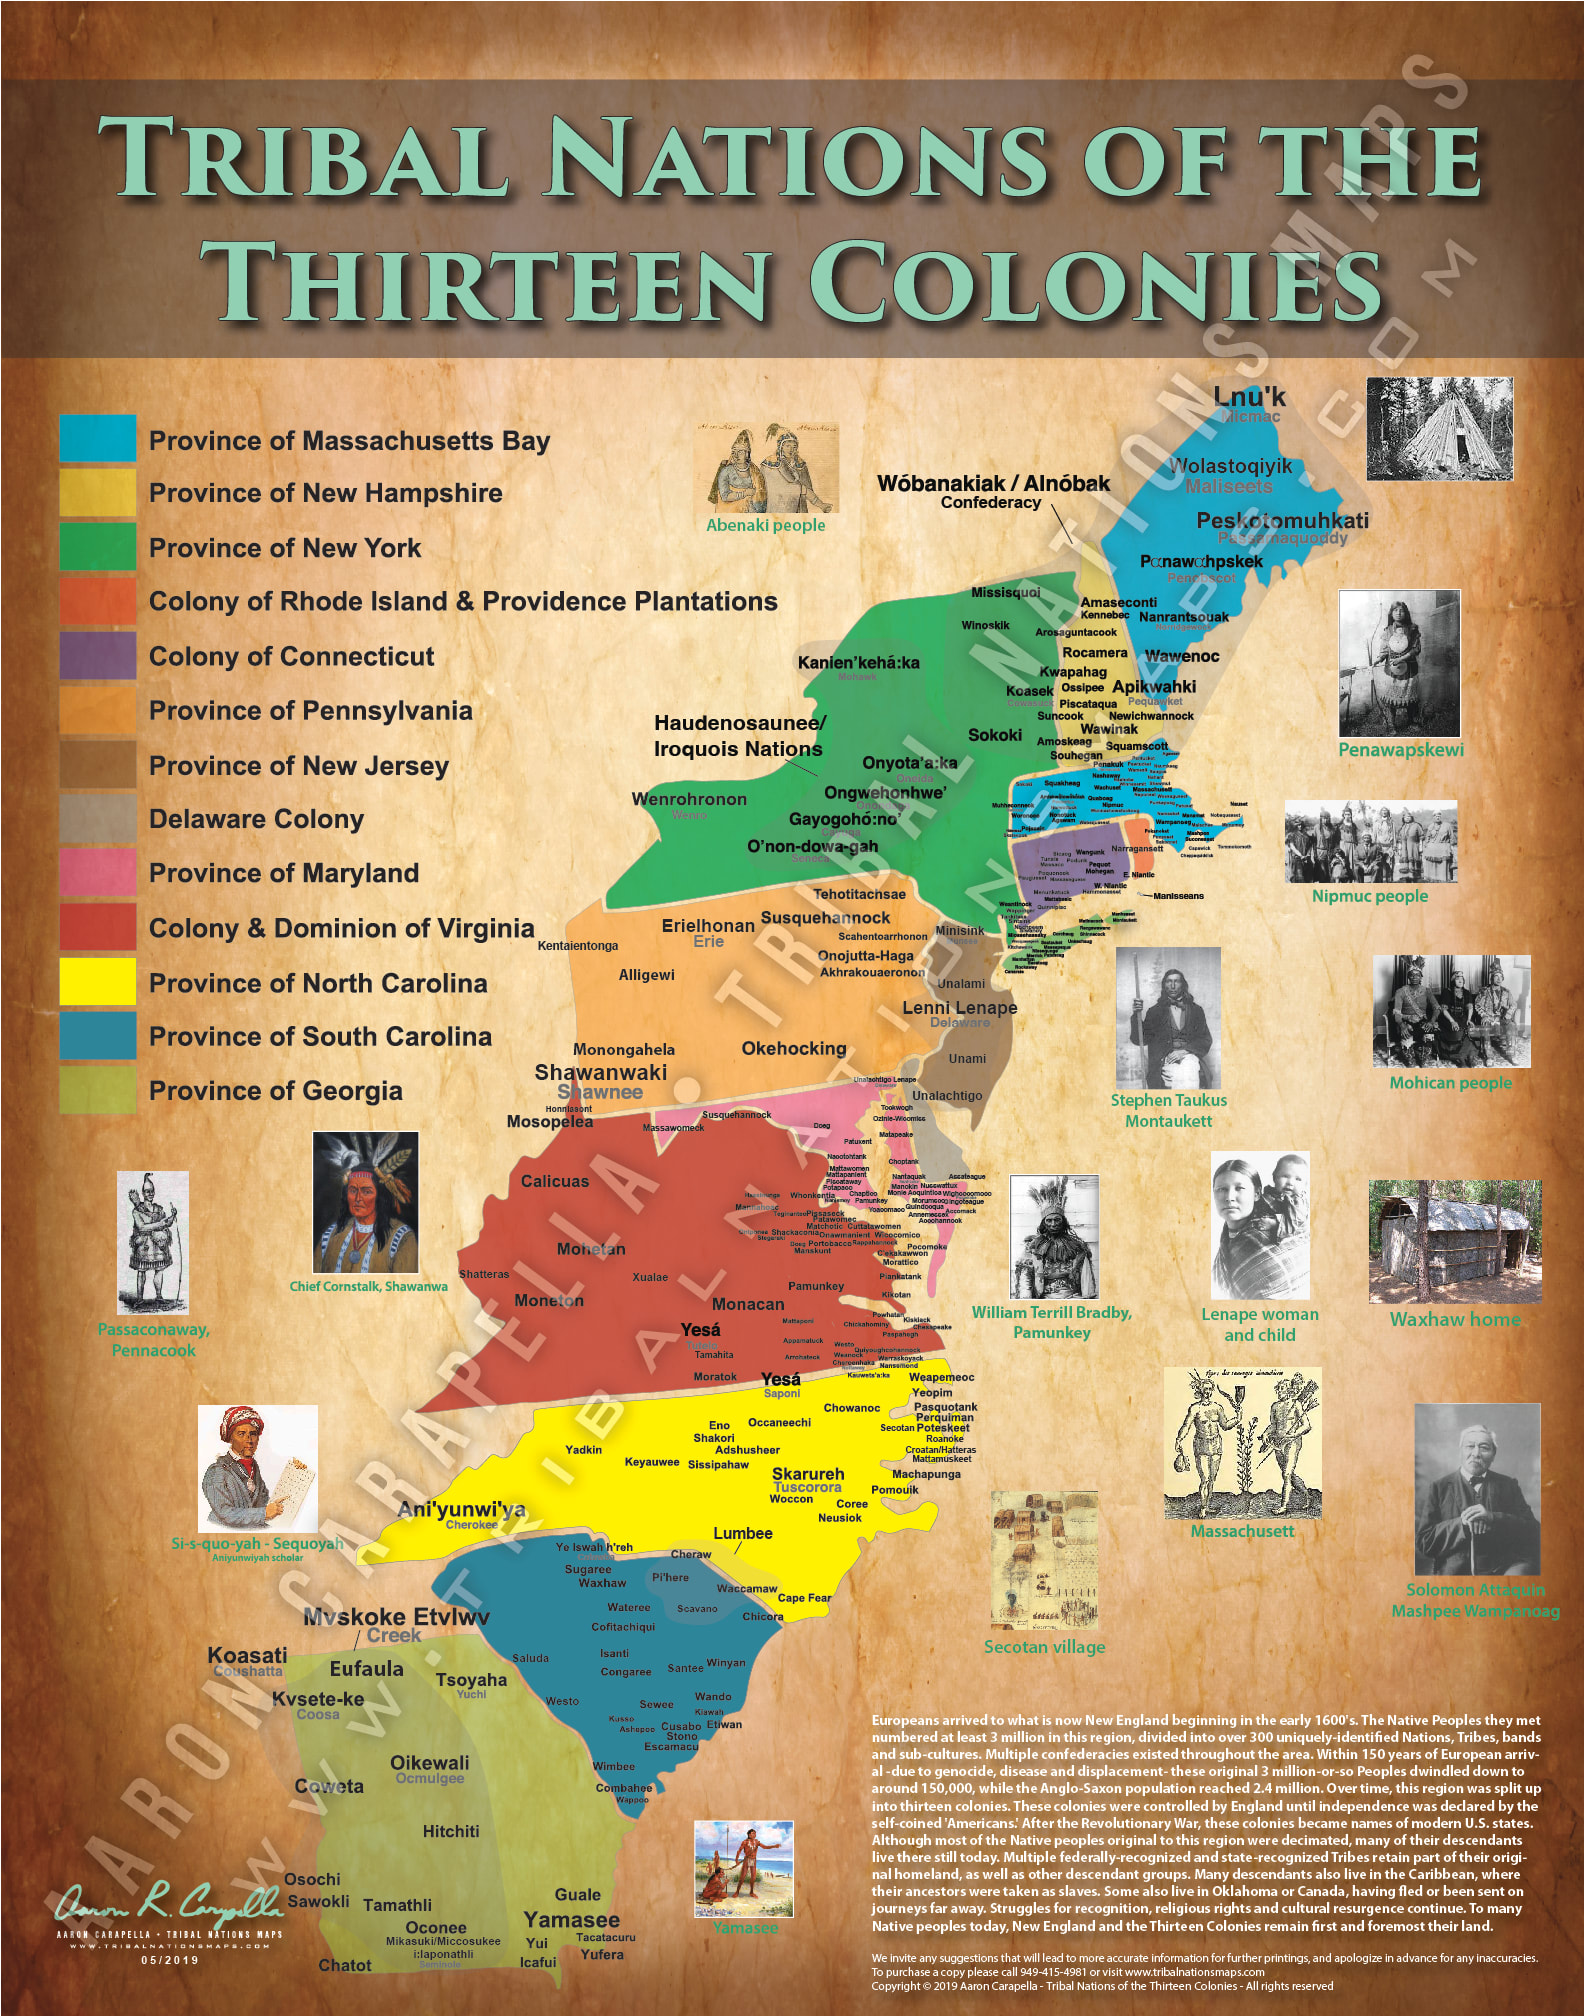 original 13 colonies list